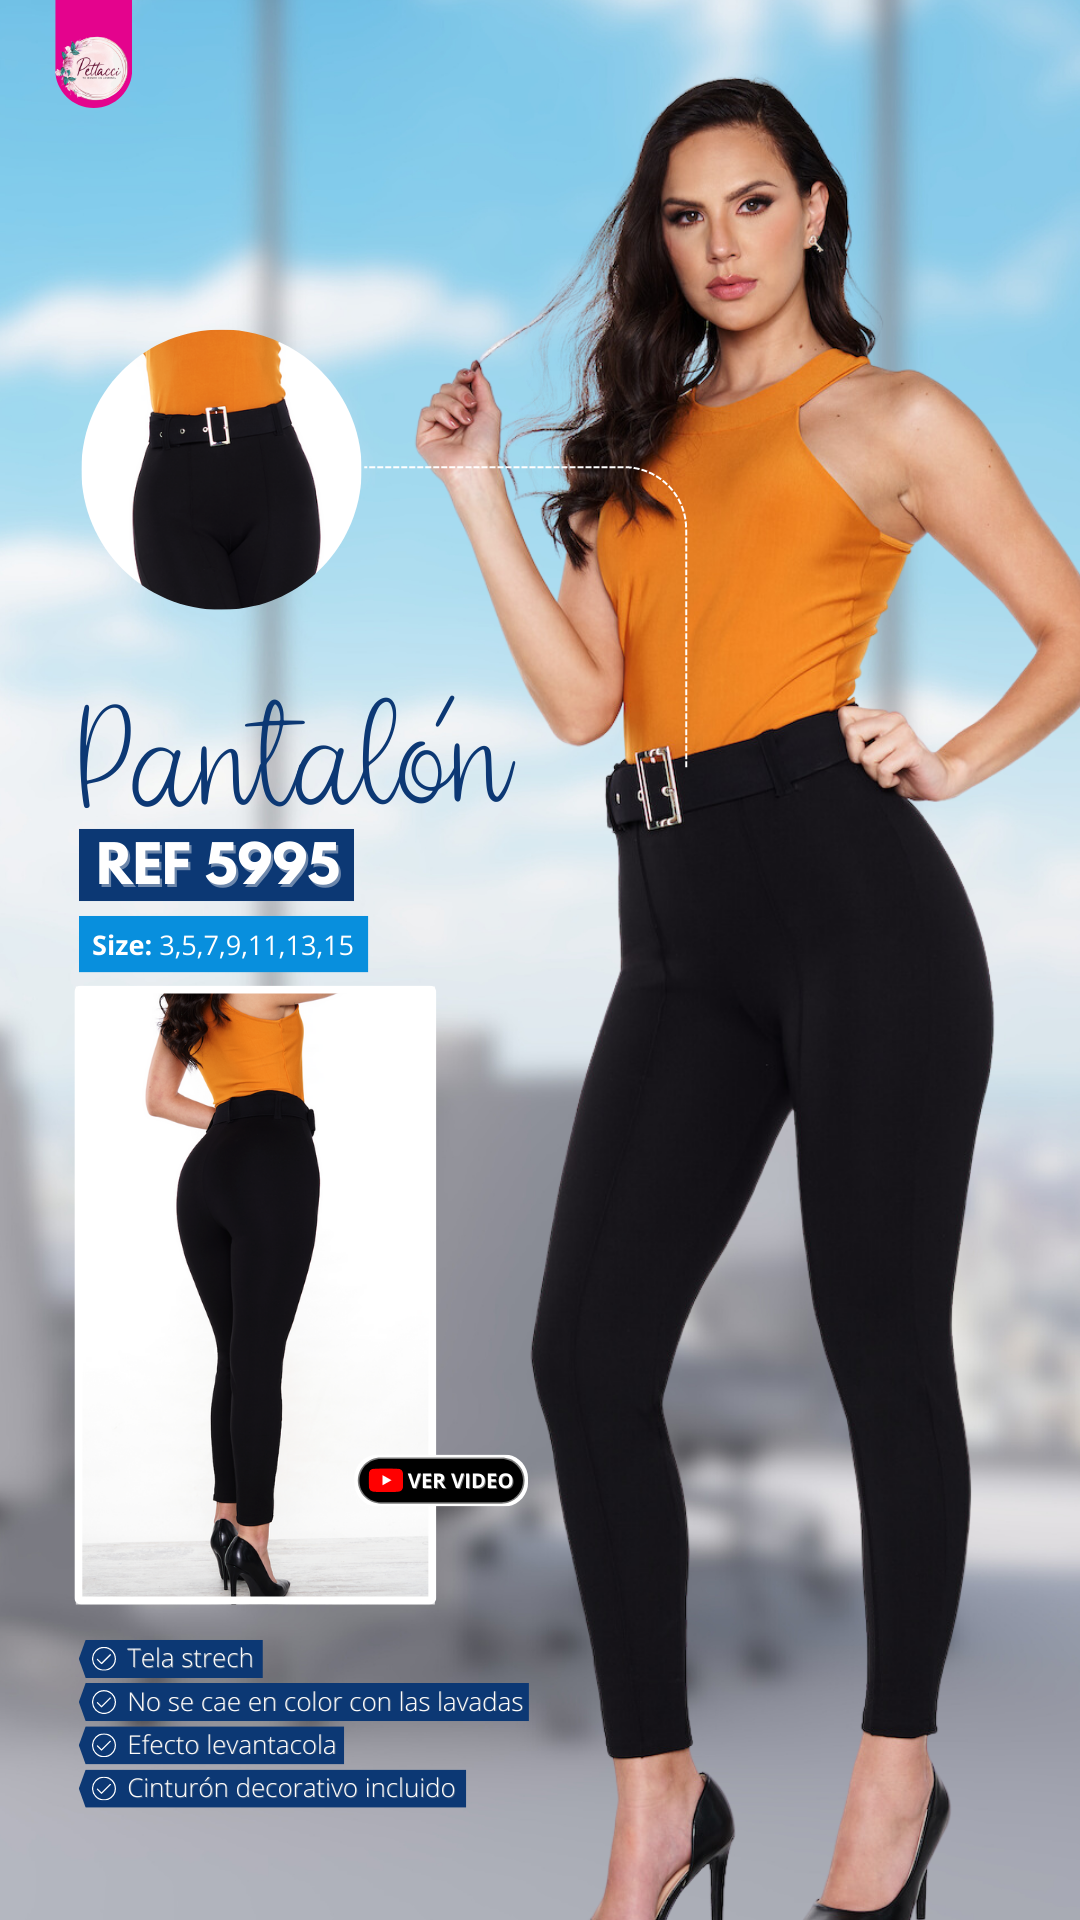 Pantalón Ref. 5995